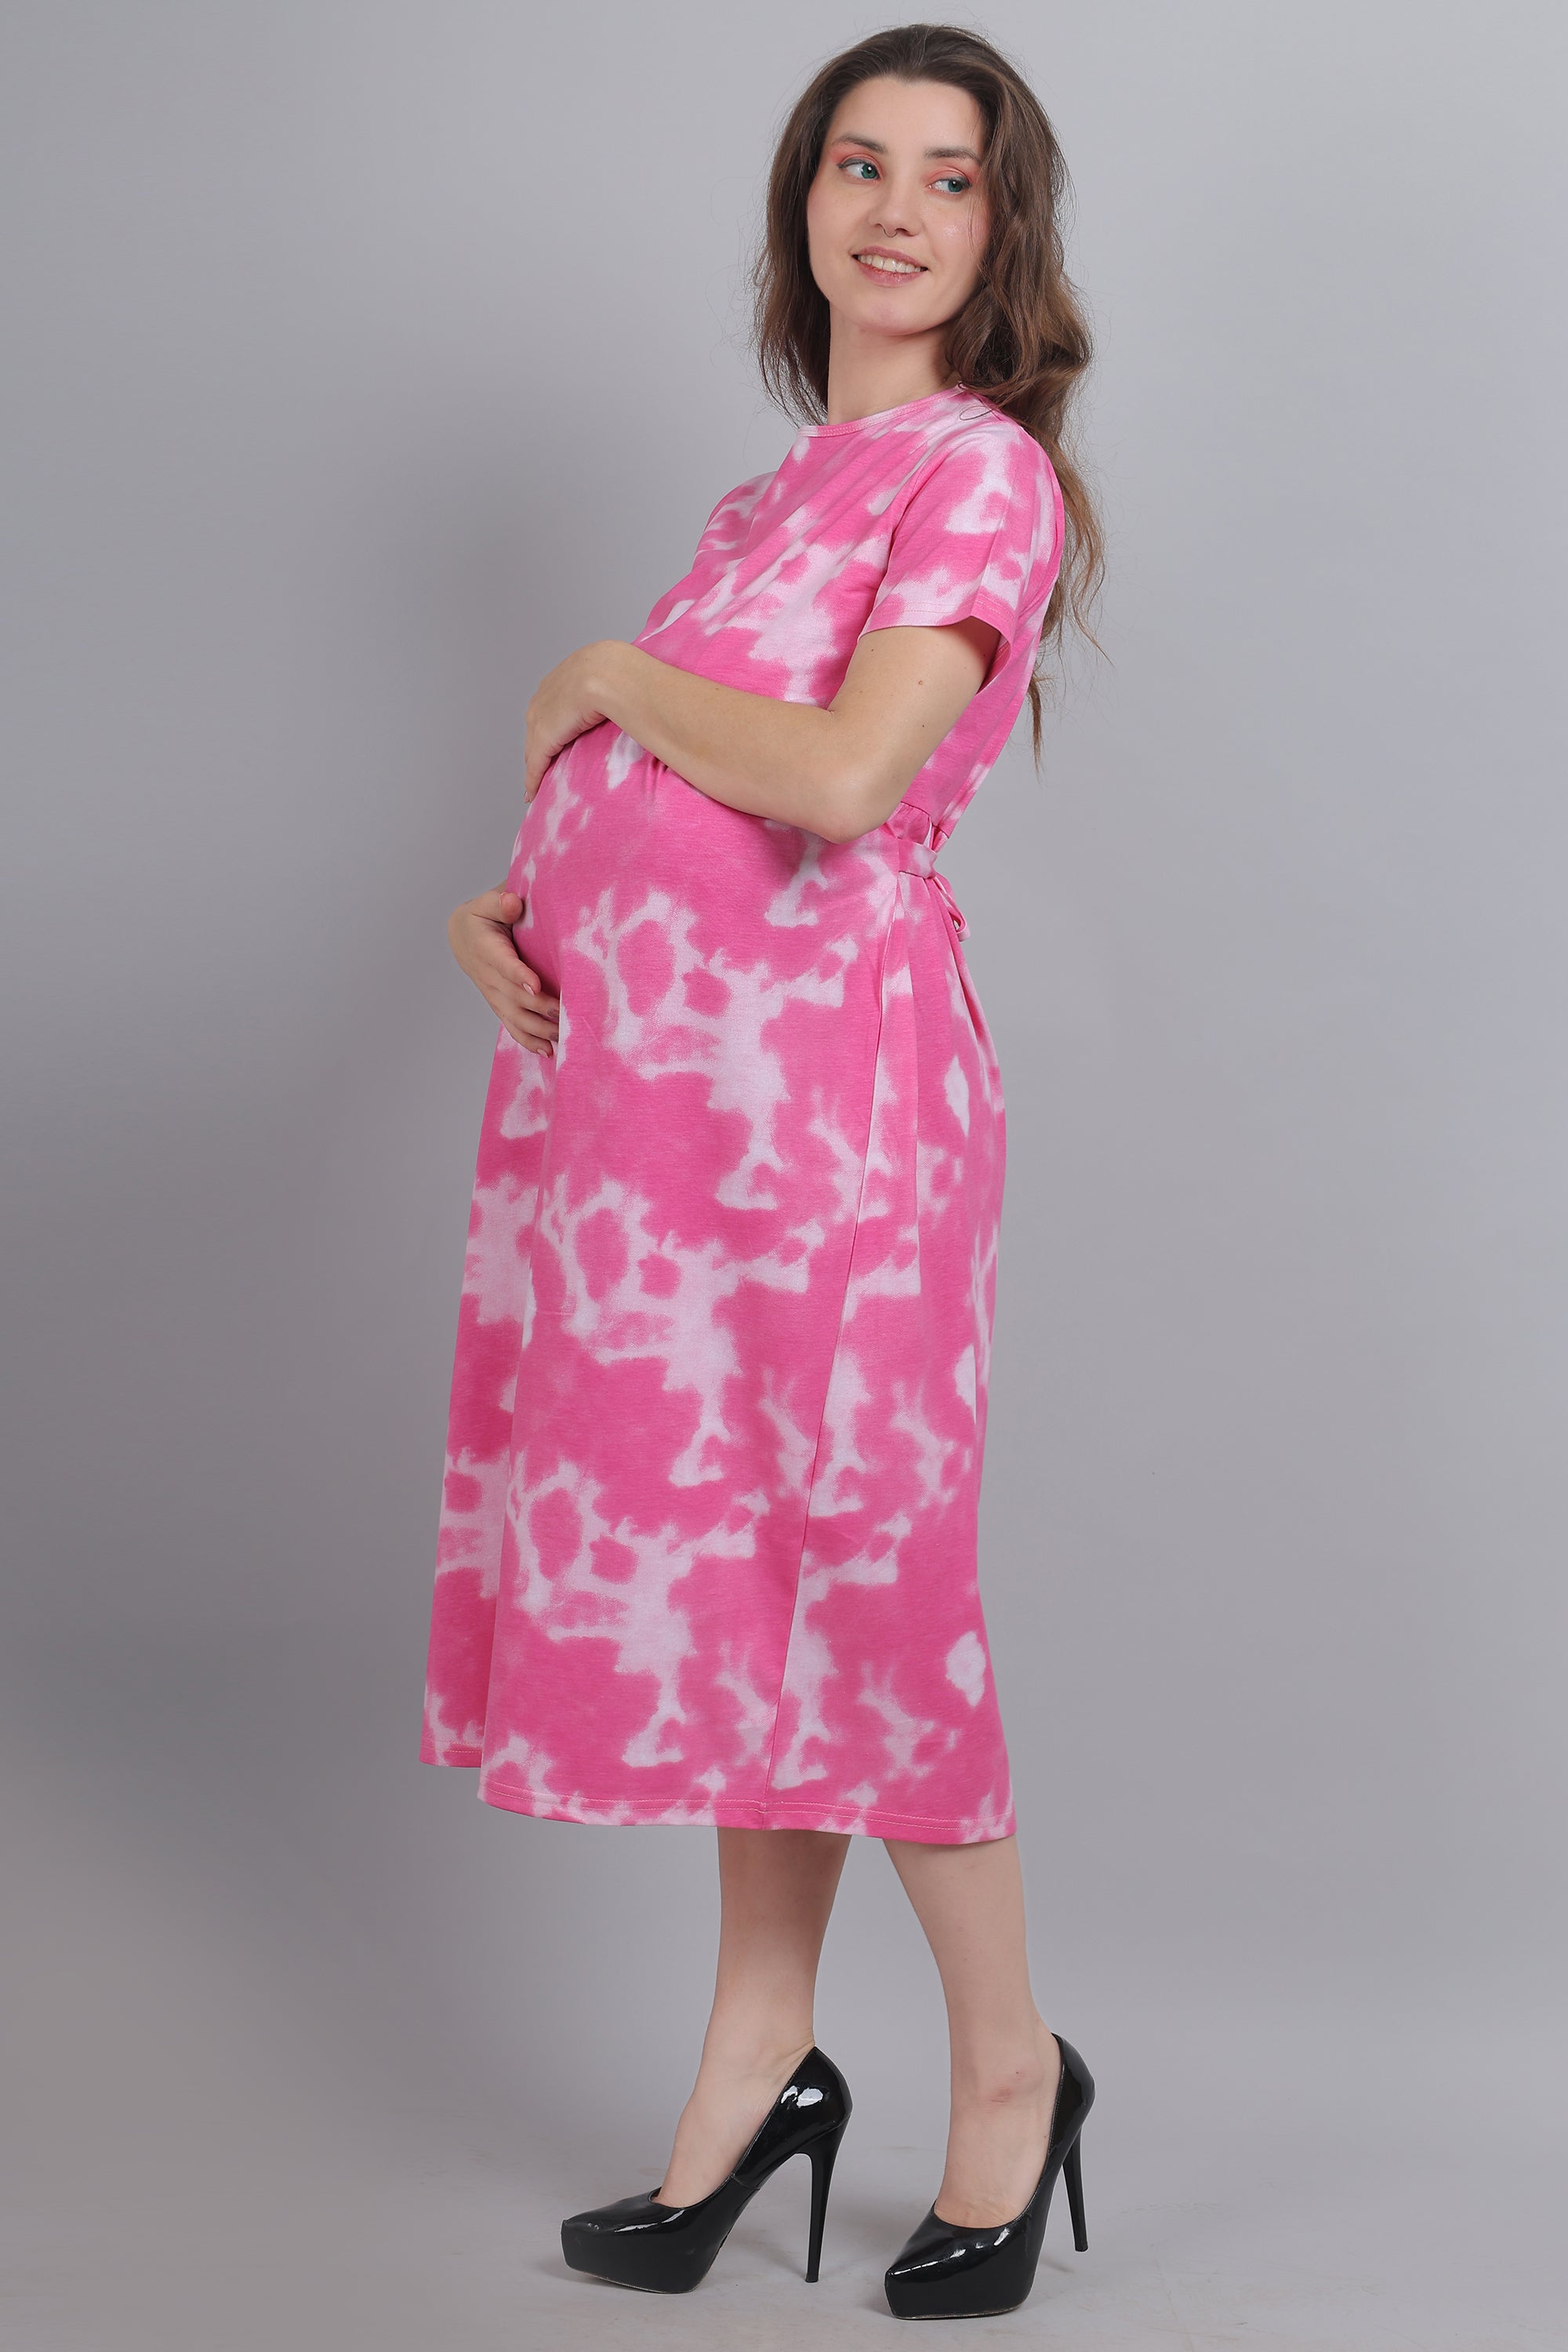 Pink Tie Dye Knitted Cotton Maternity Loungewear Dress